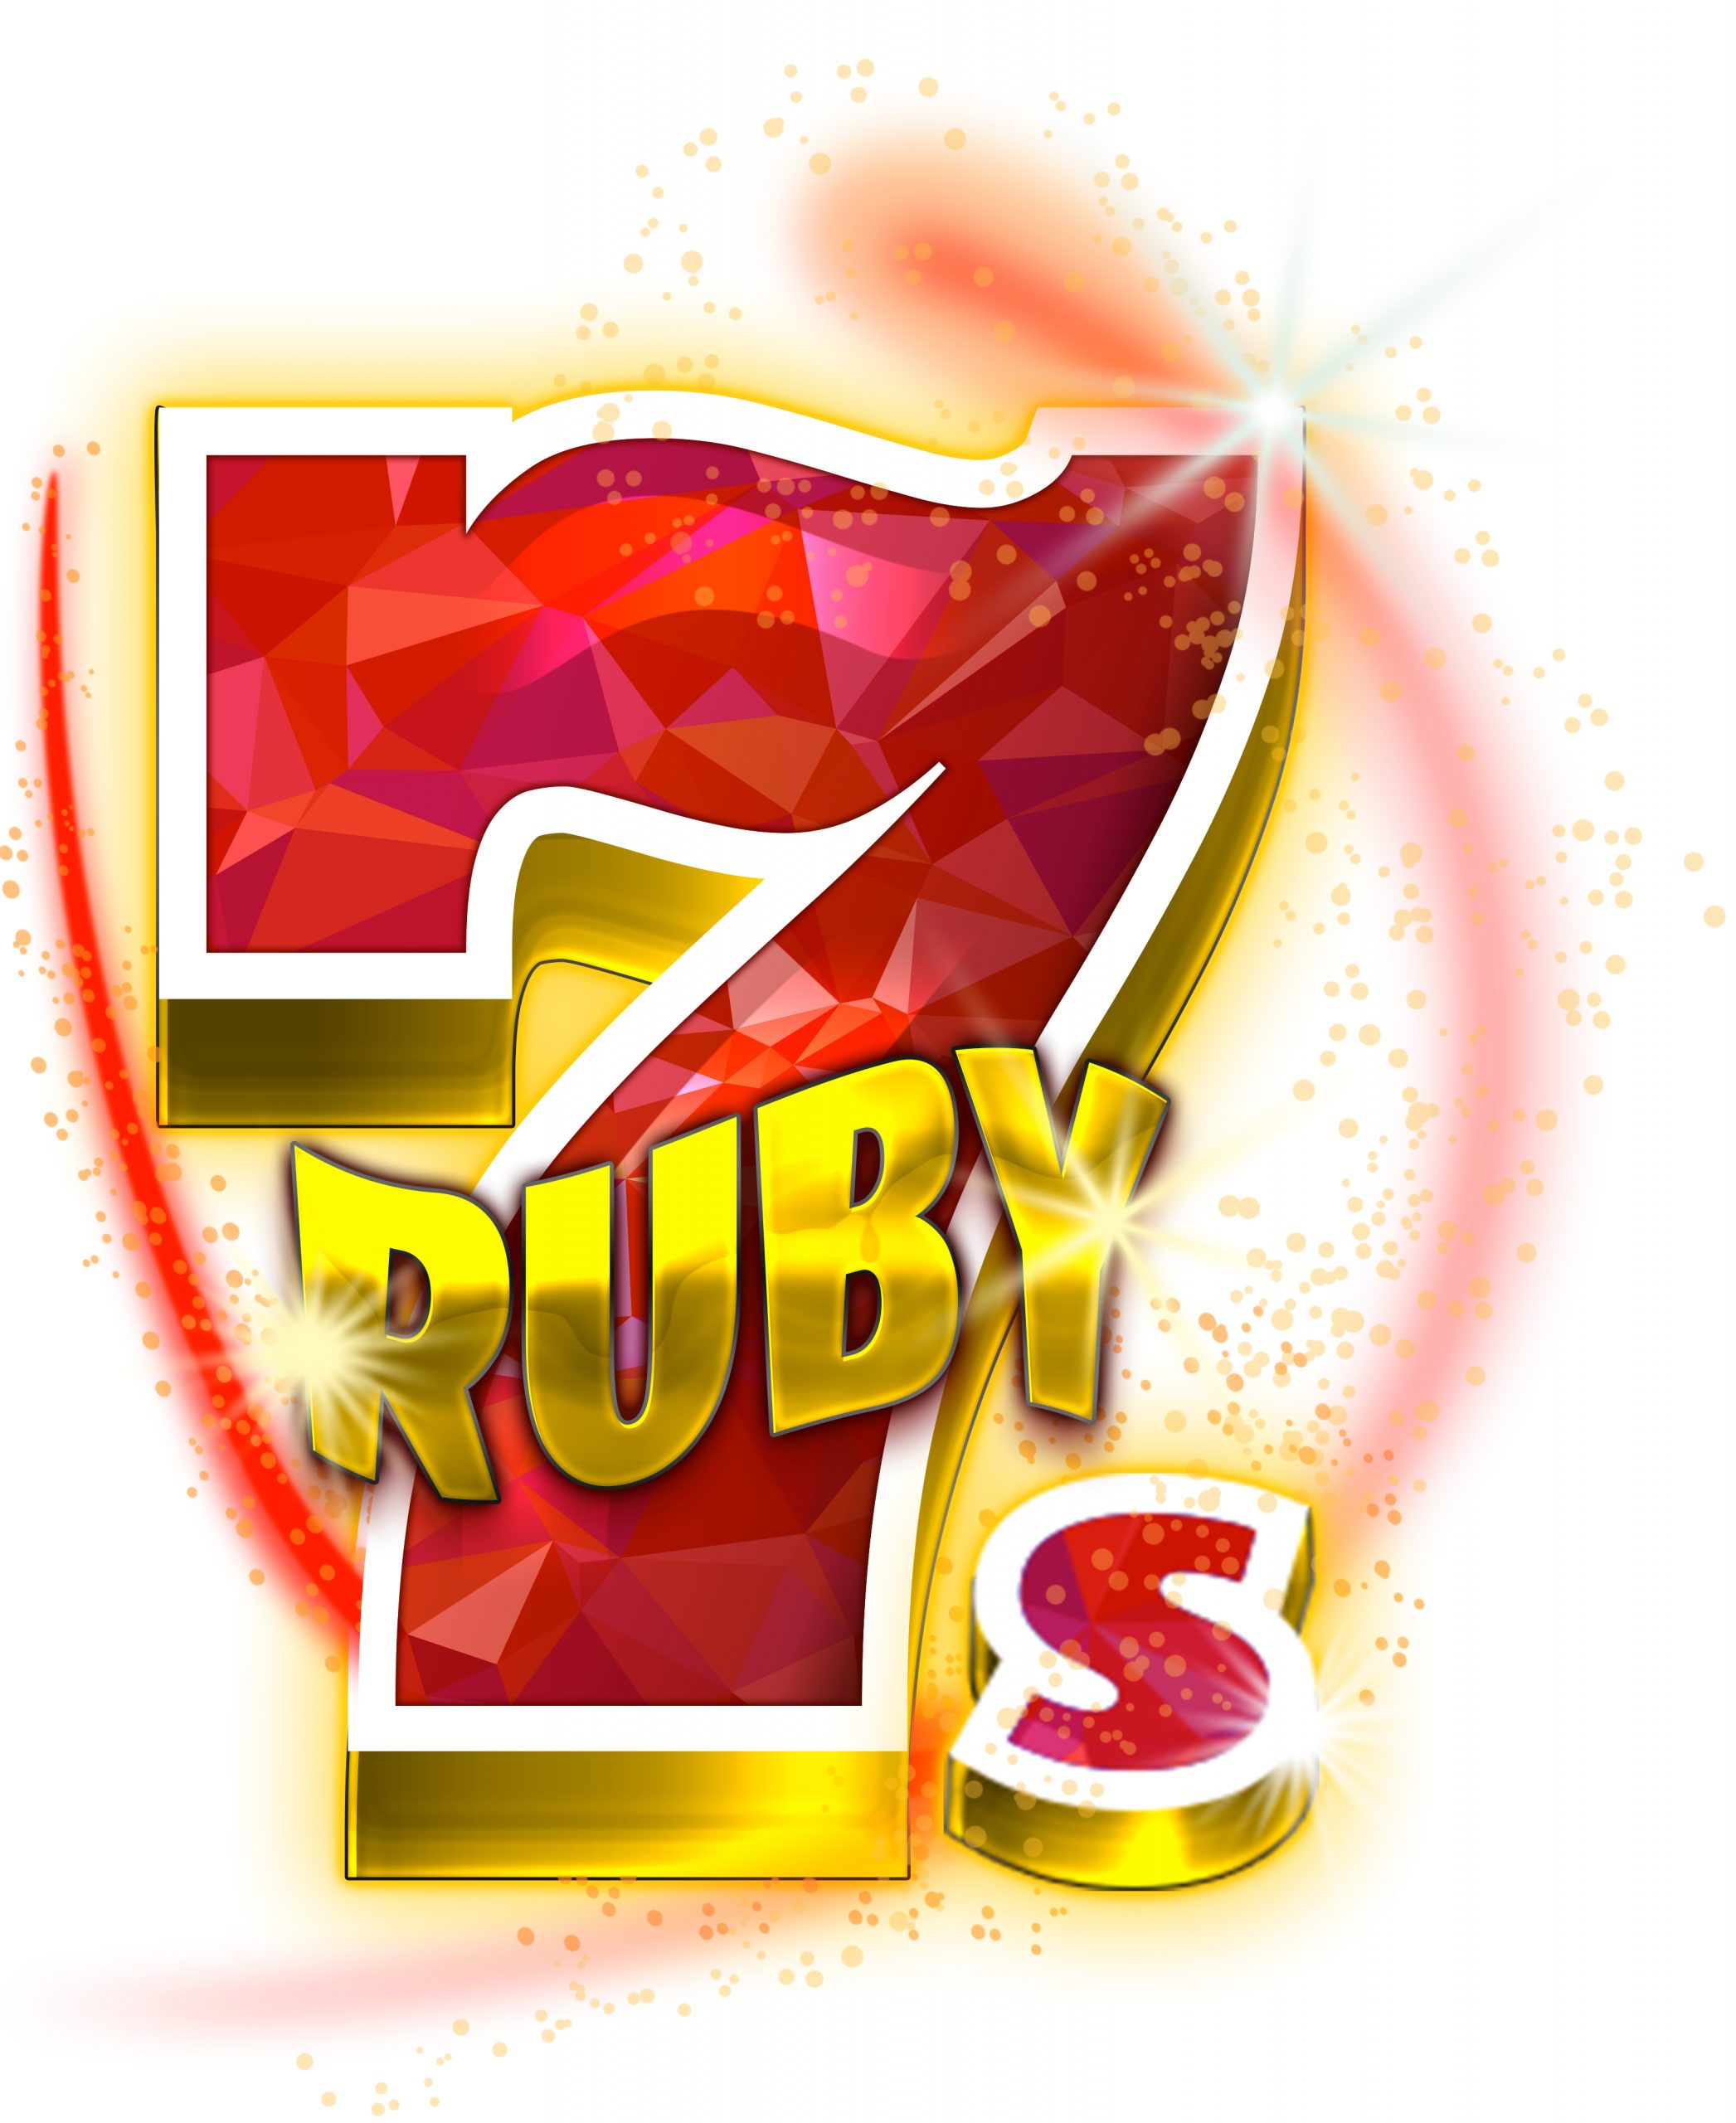 Ruby’s 7